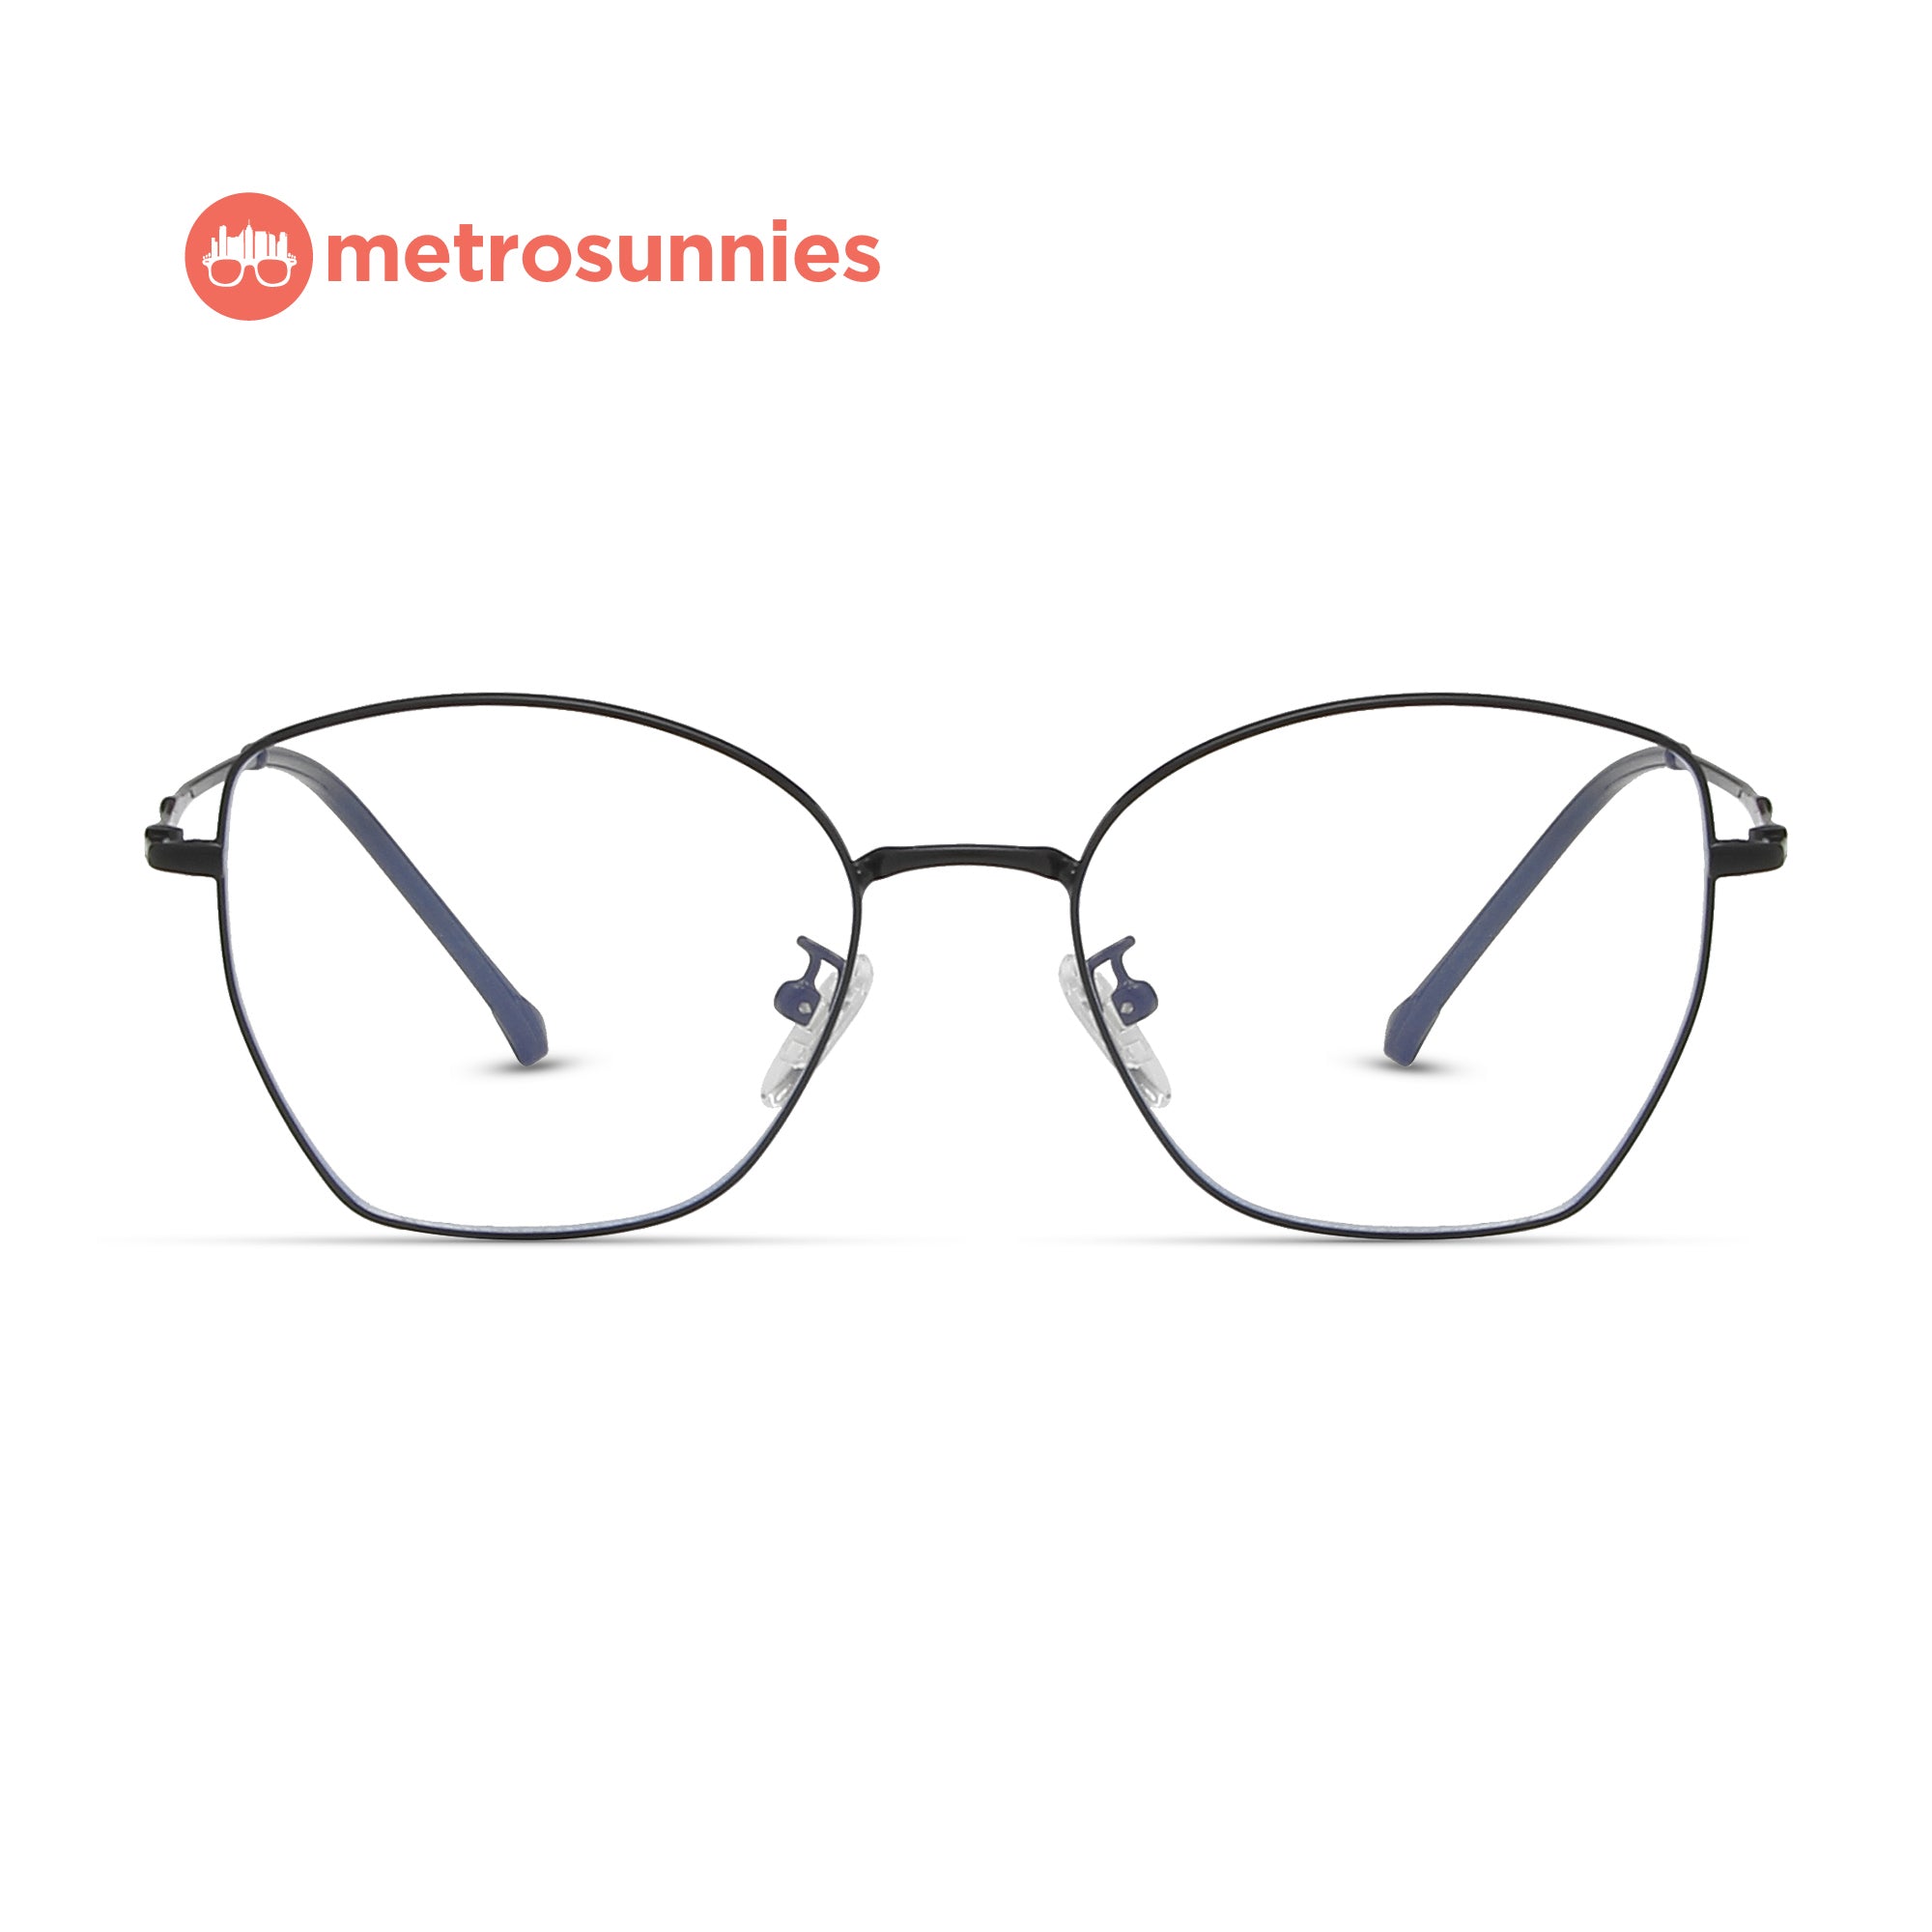 MetroSunnies Ivy Specs (Black) / Con-Strain Blue Light / Anti-Radiation Computer Eyeglasses